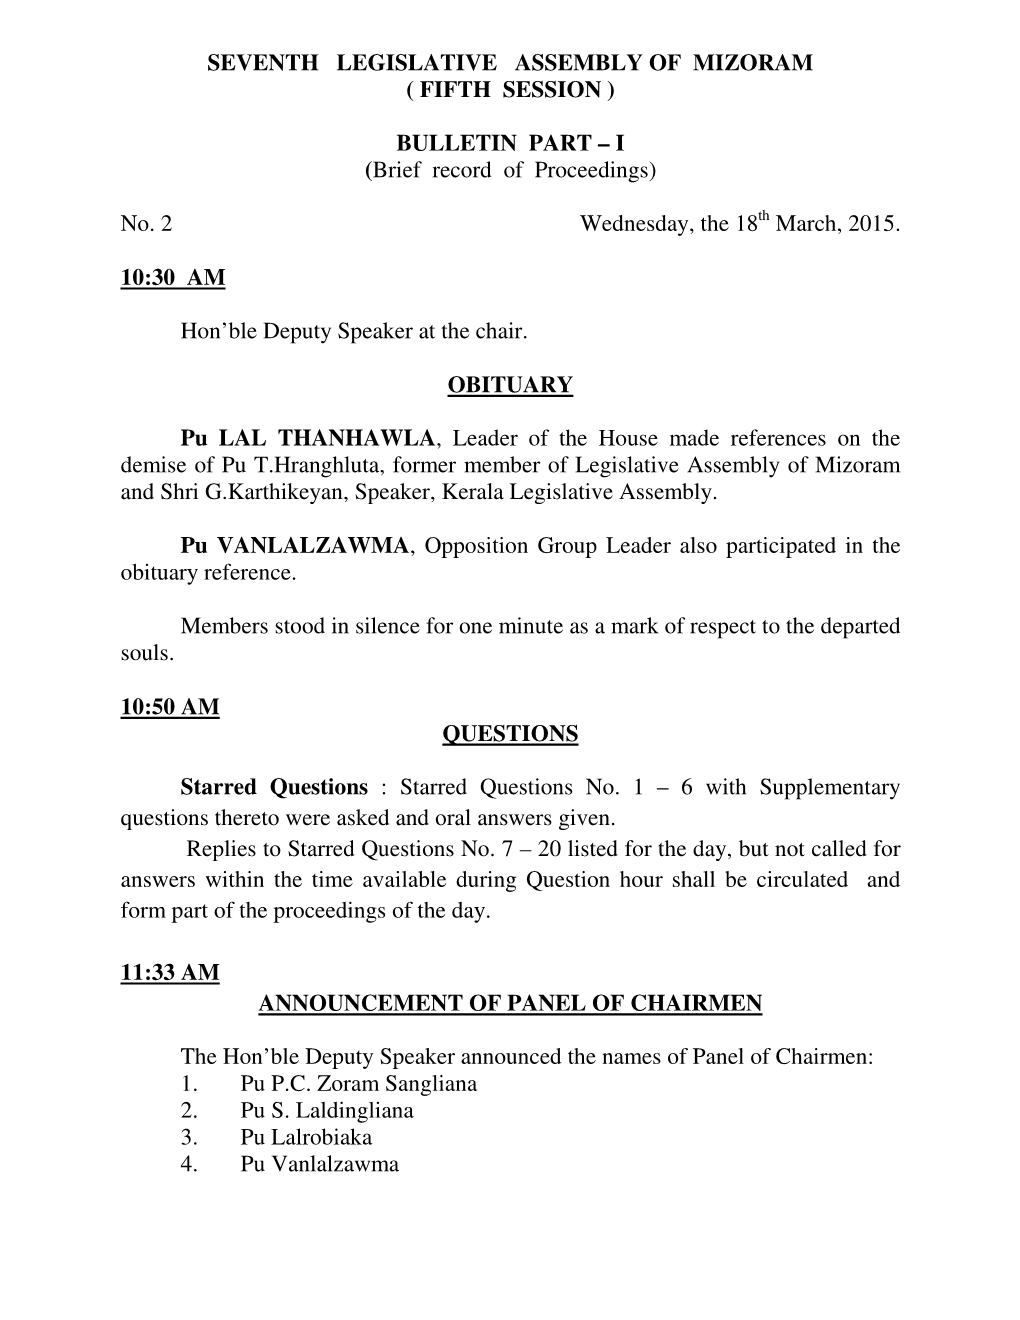 Seventh Legislative Assembly of Mizoram ( Fifth Session )